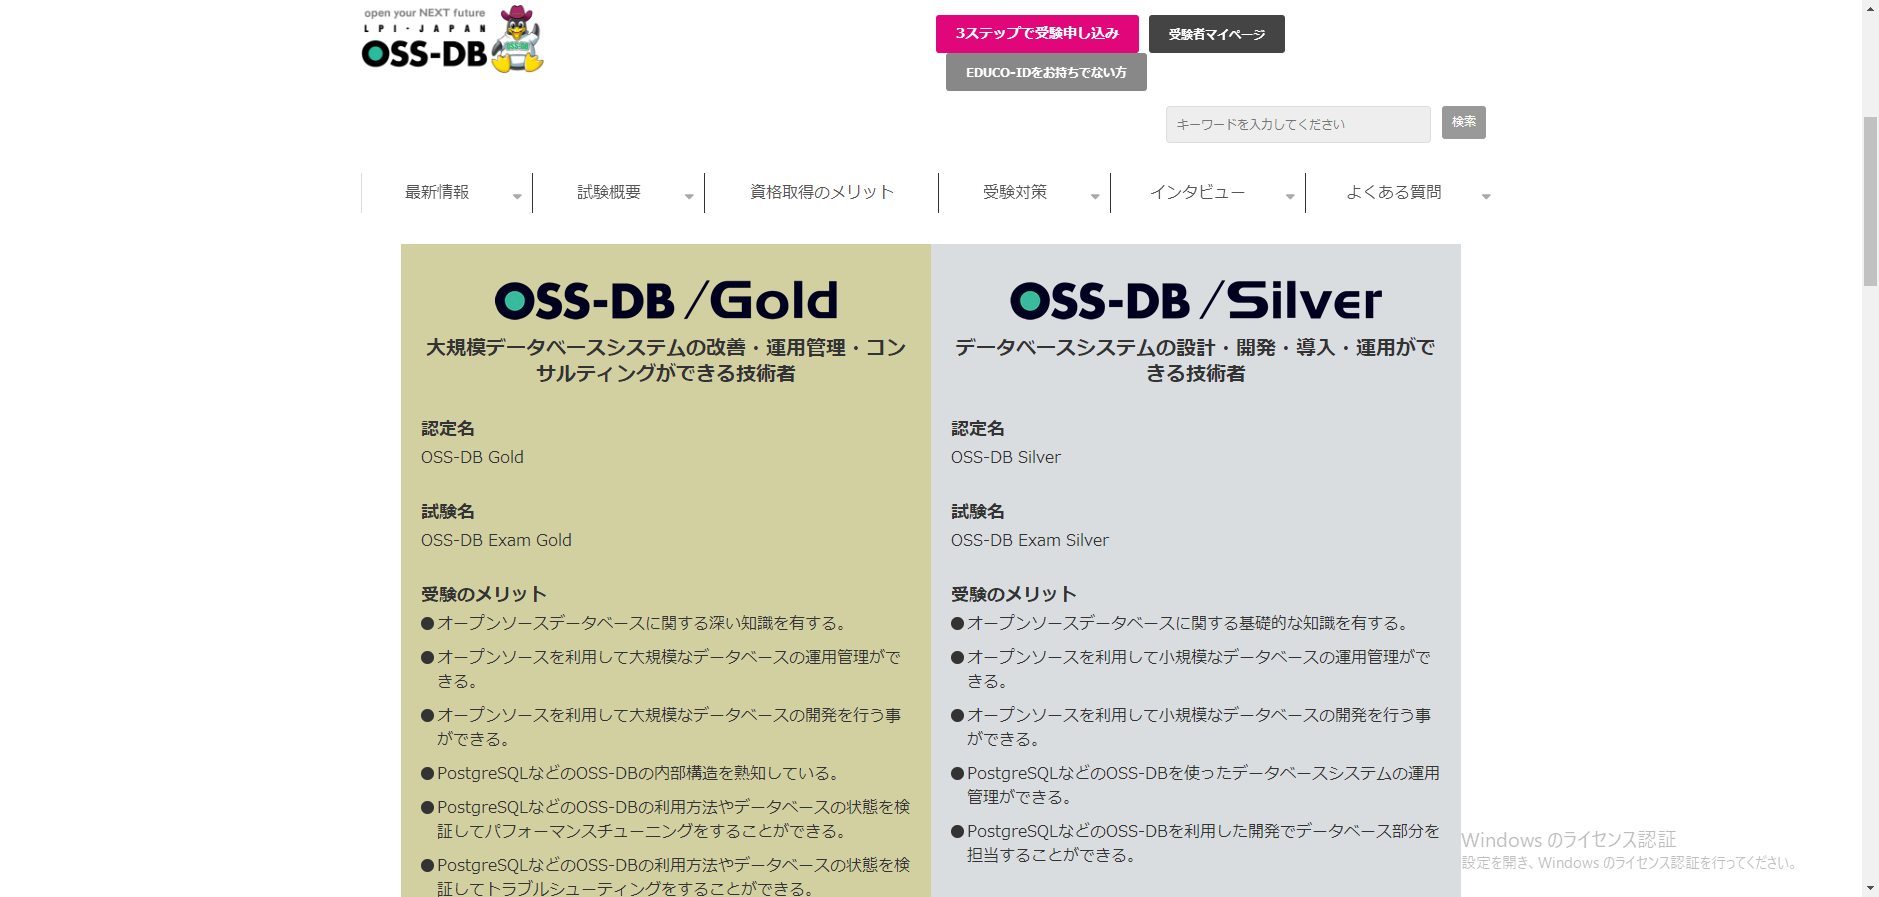 02-OSS-DB技術者認定試験.png